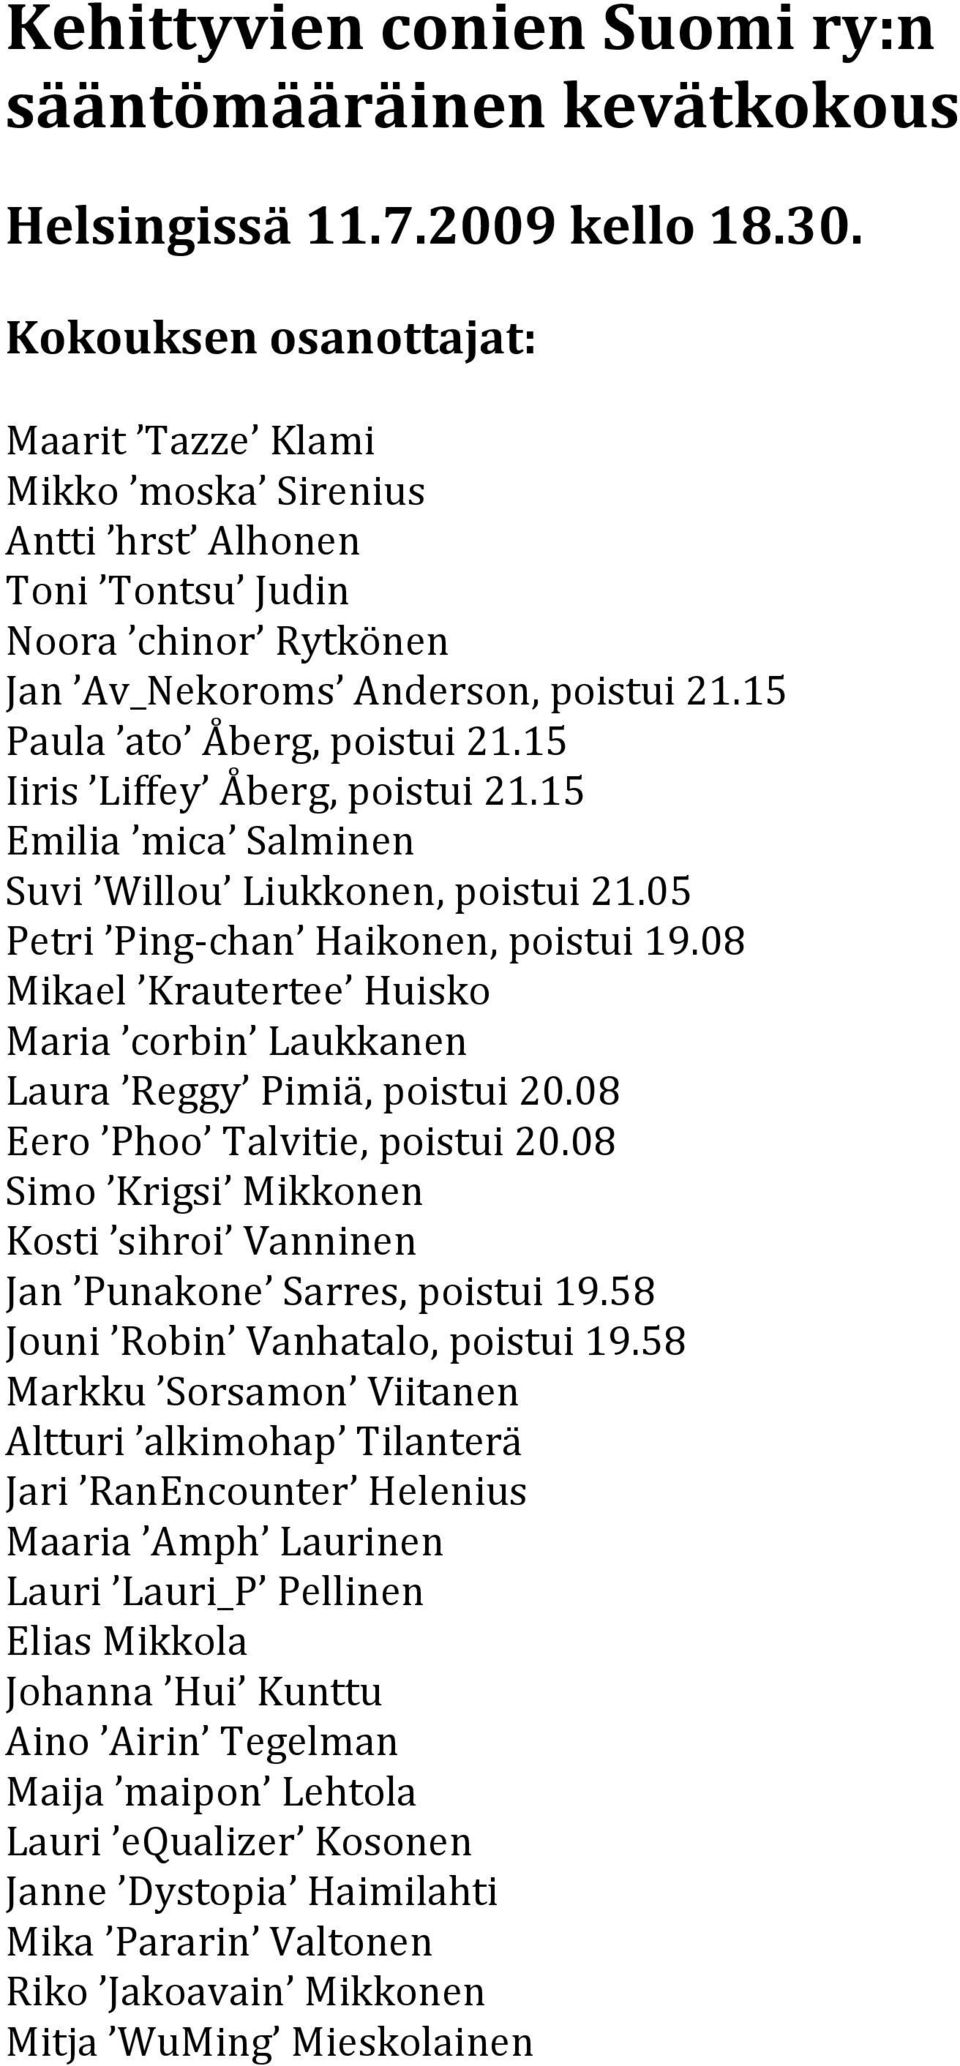 15 Iiris Liffey Åberg,poistui21.15 Emilia mica Salminen Suvi Willou Liukkonen,poistui21.05 Petri Ping chan Haikonen,poistui19.